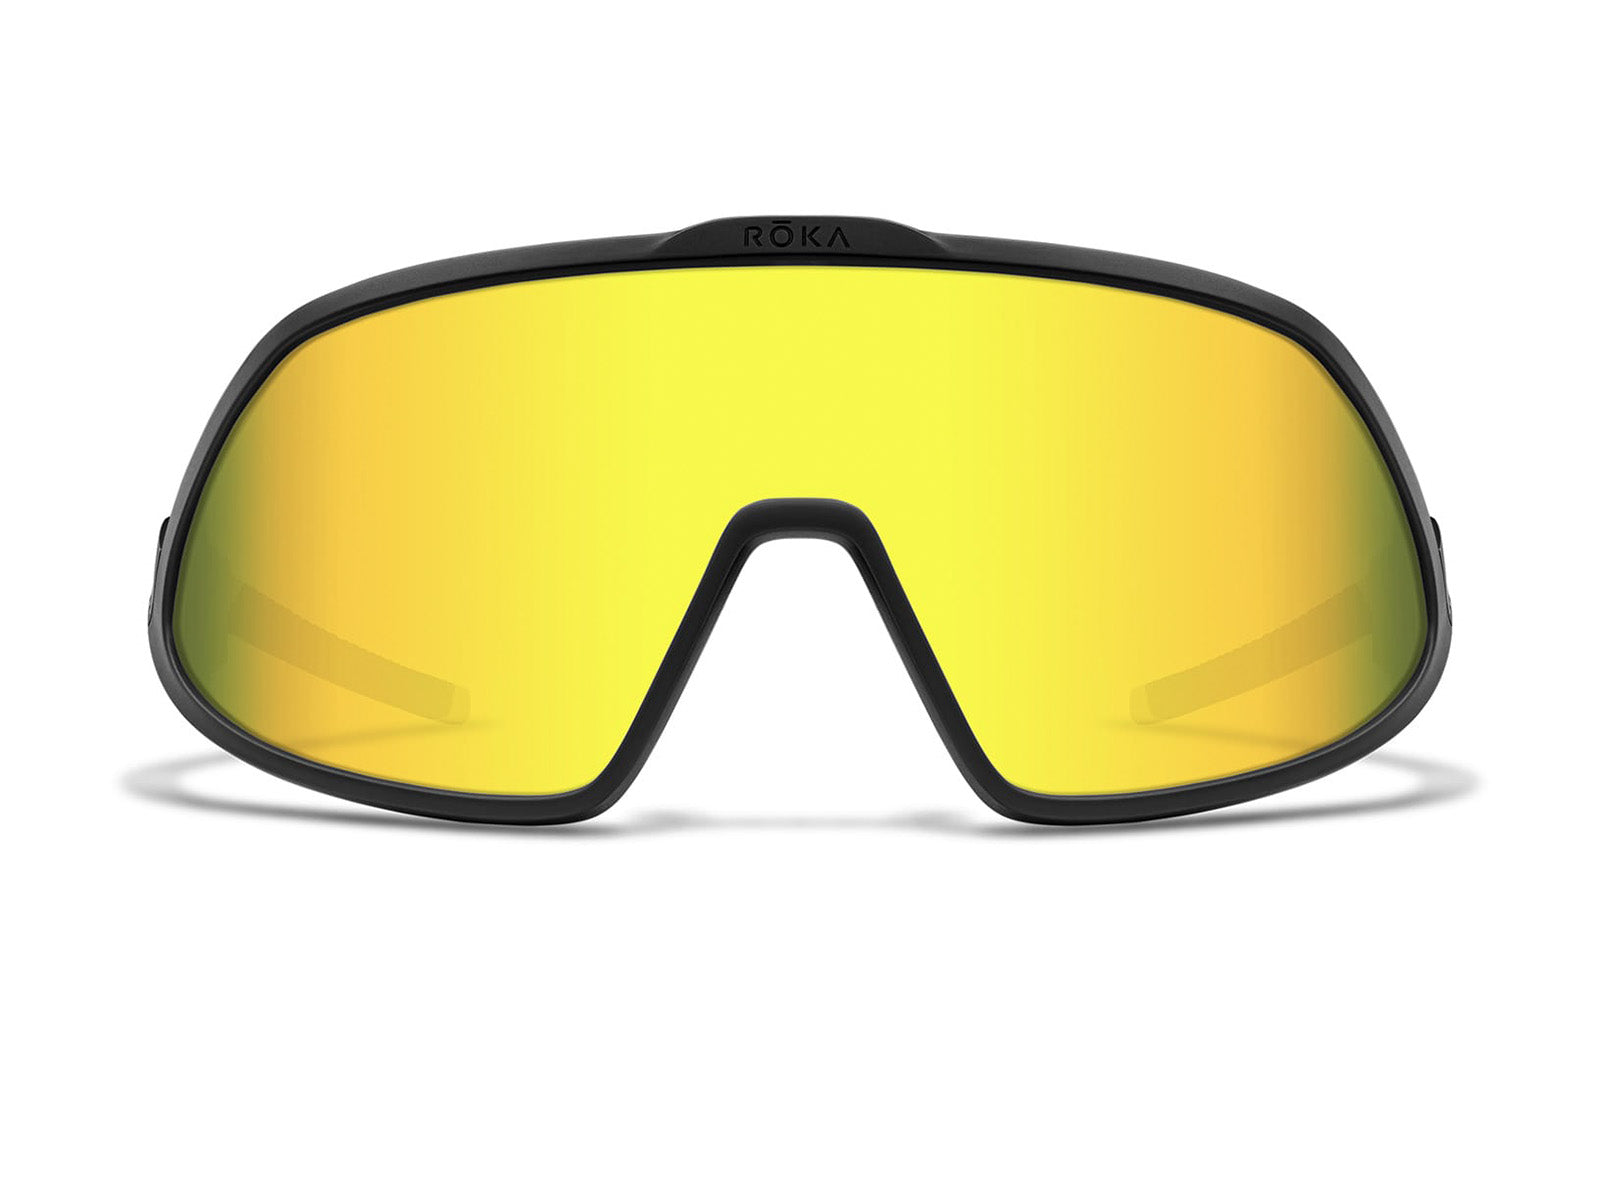 Matador Sports Sunglasses  Advanced Performance Eyewear